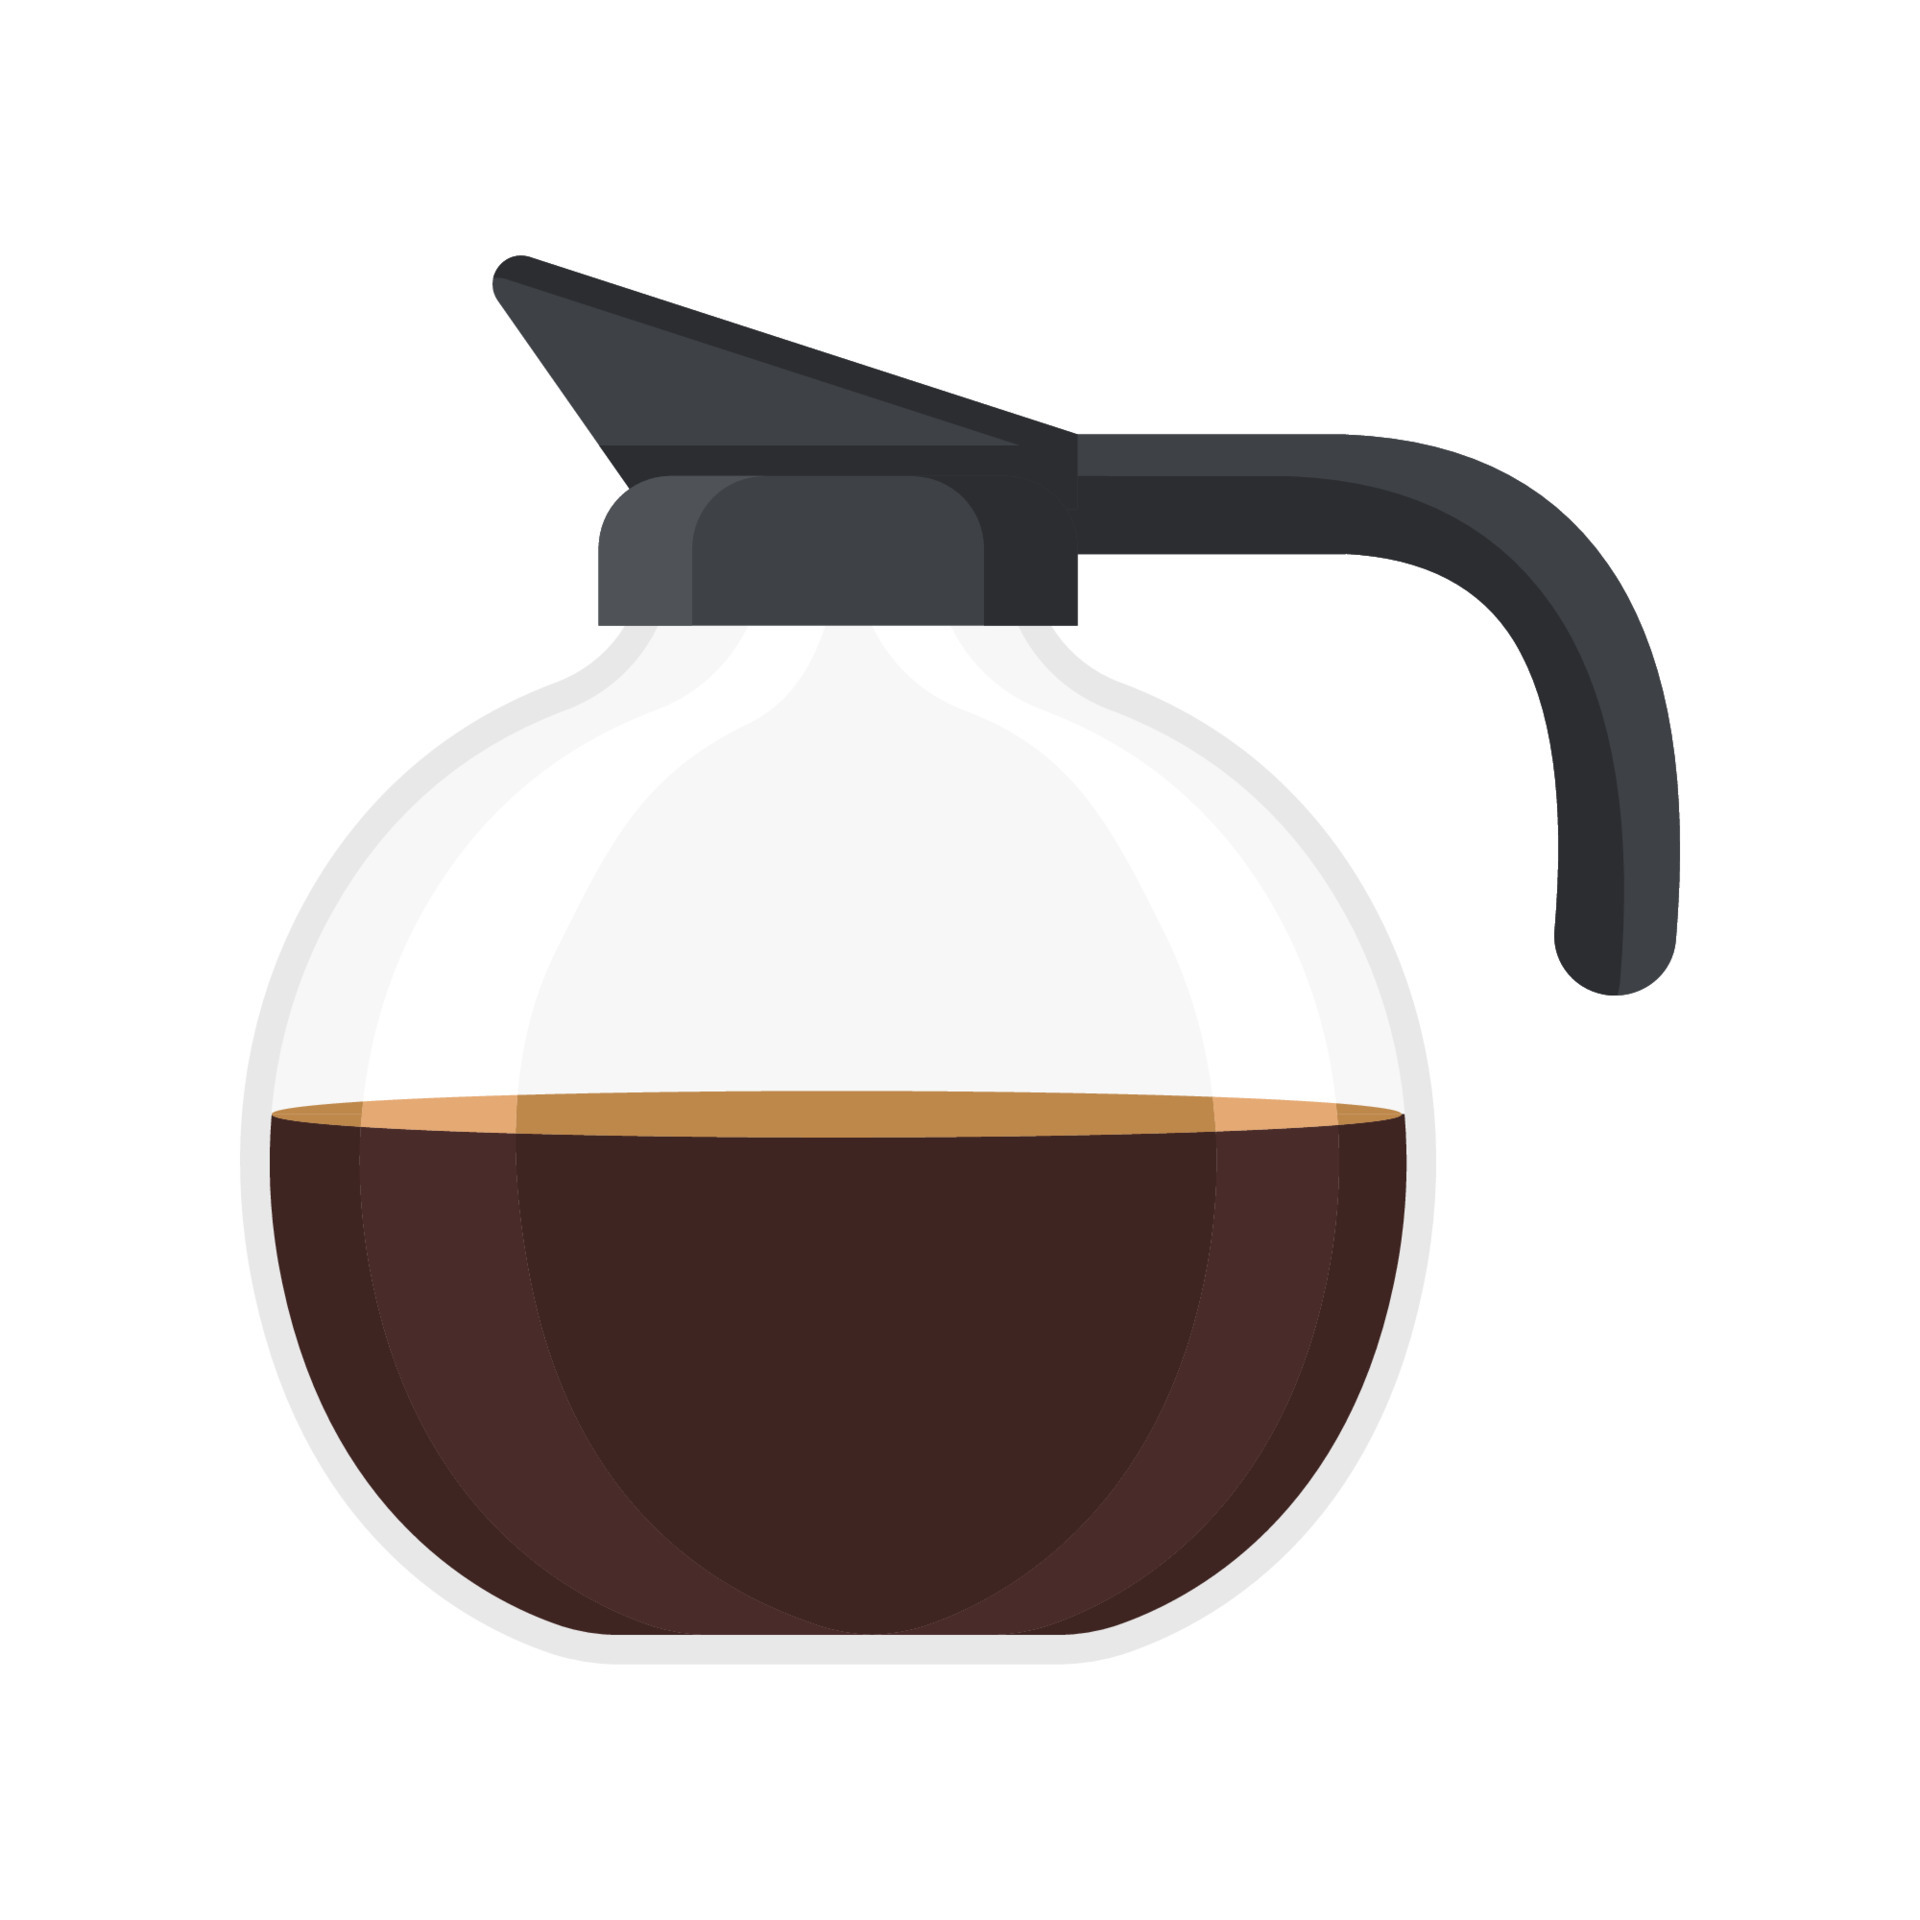 https://static.vecteezy.com/system/resources/previews/004/557/535/original/transparent-glass-coffee-pot-vector.jpg